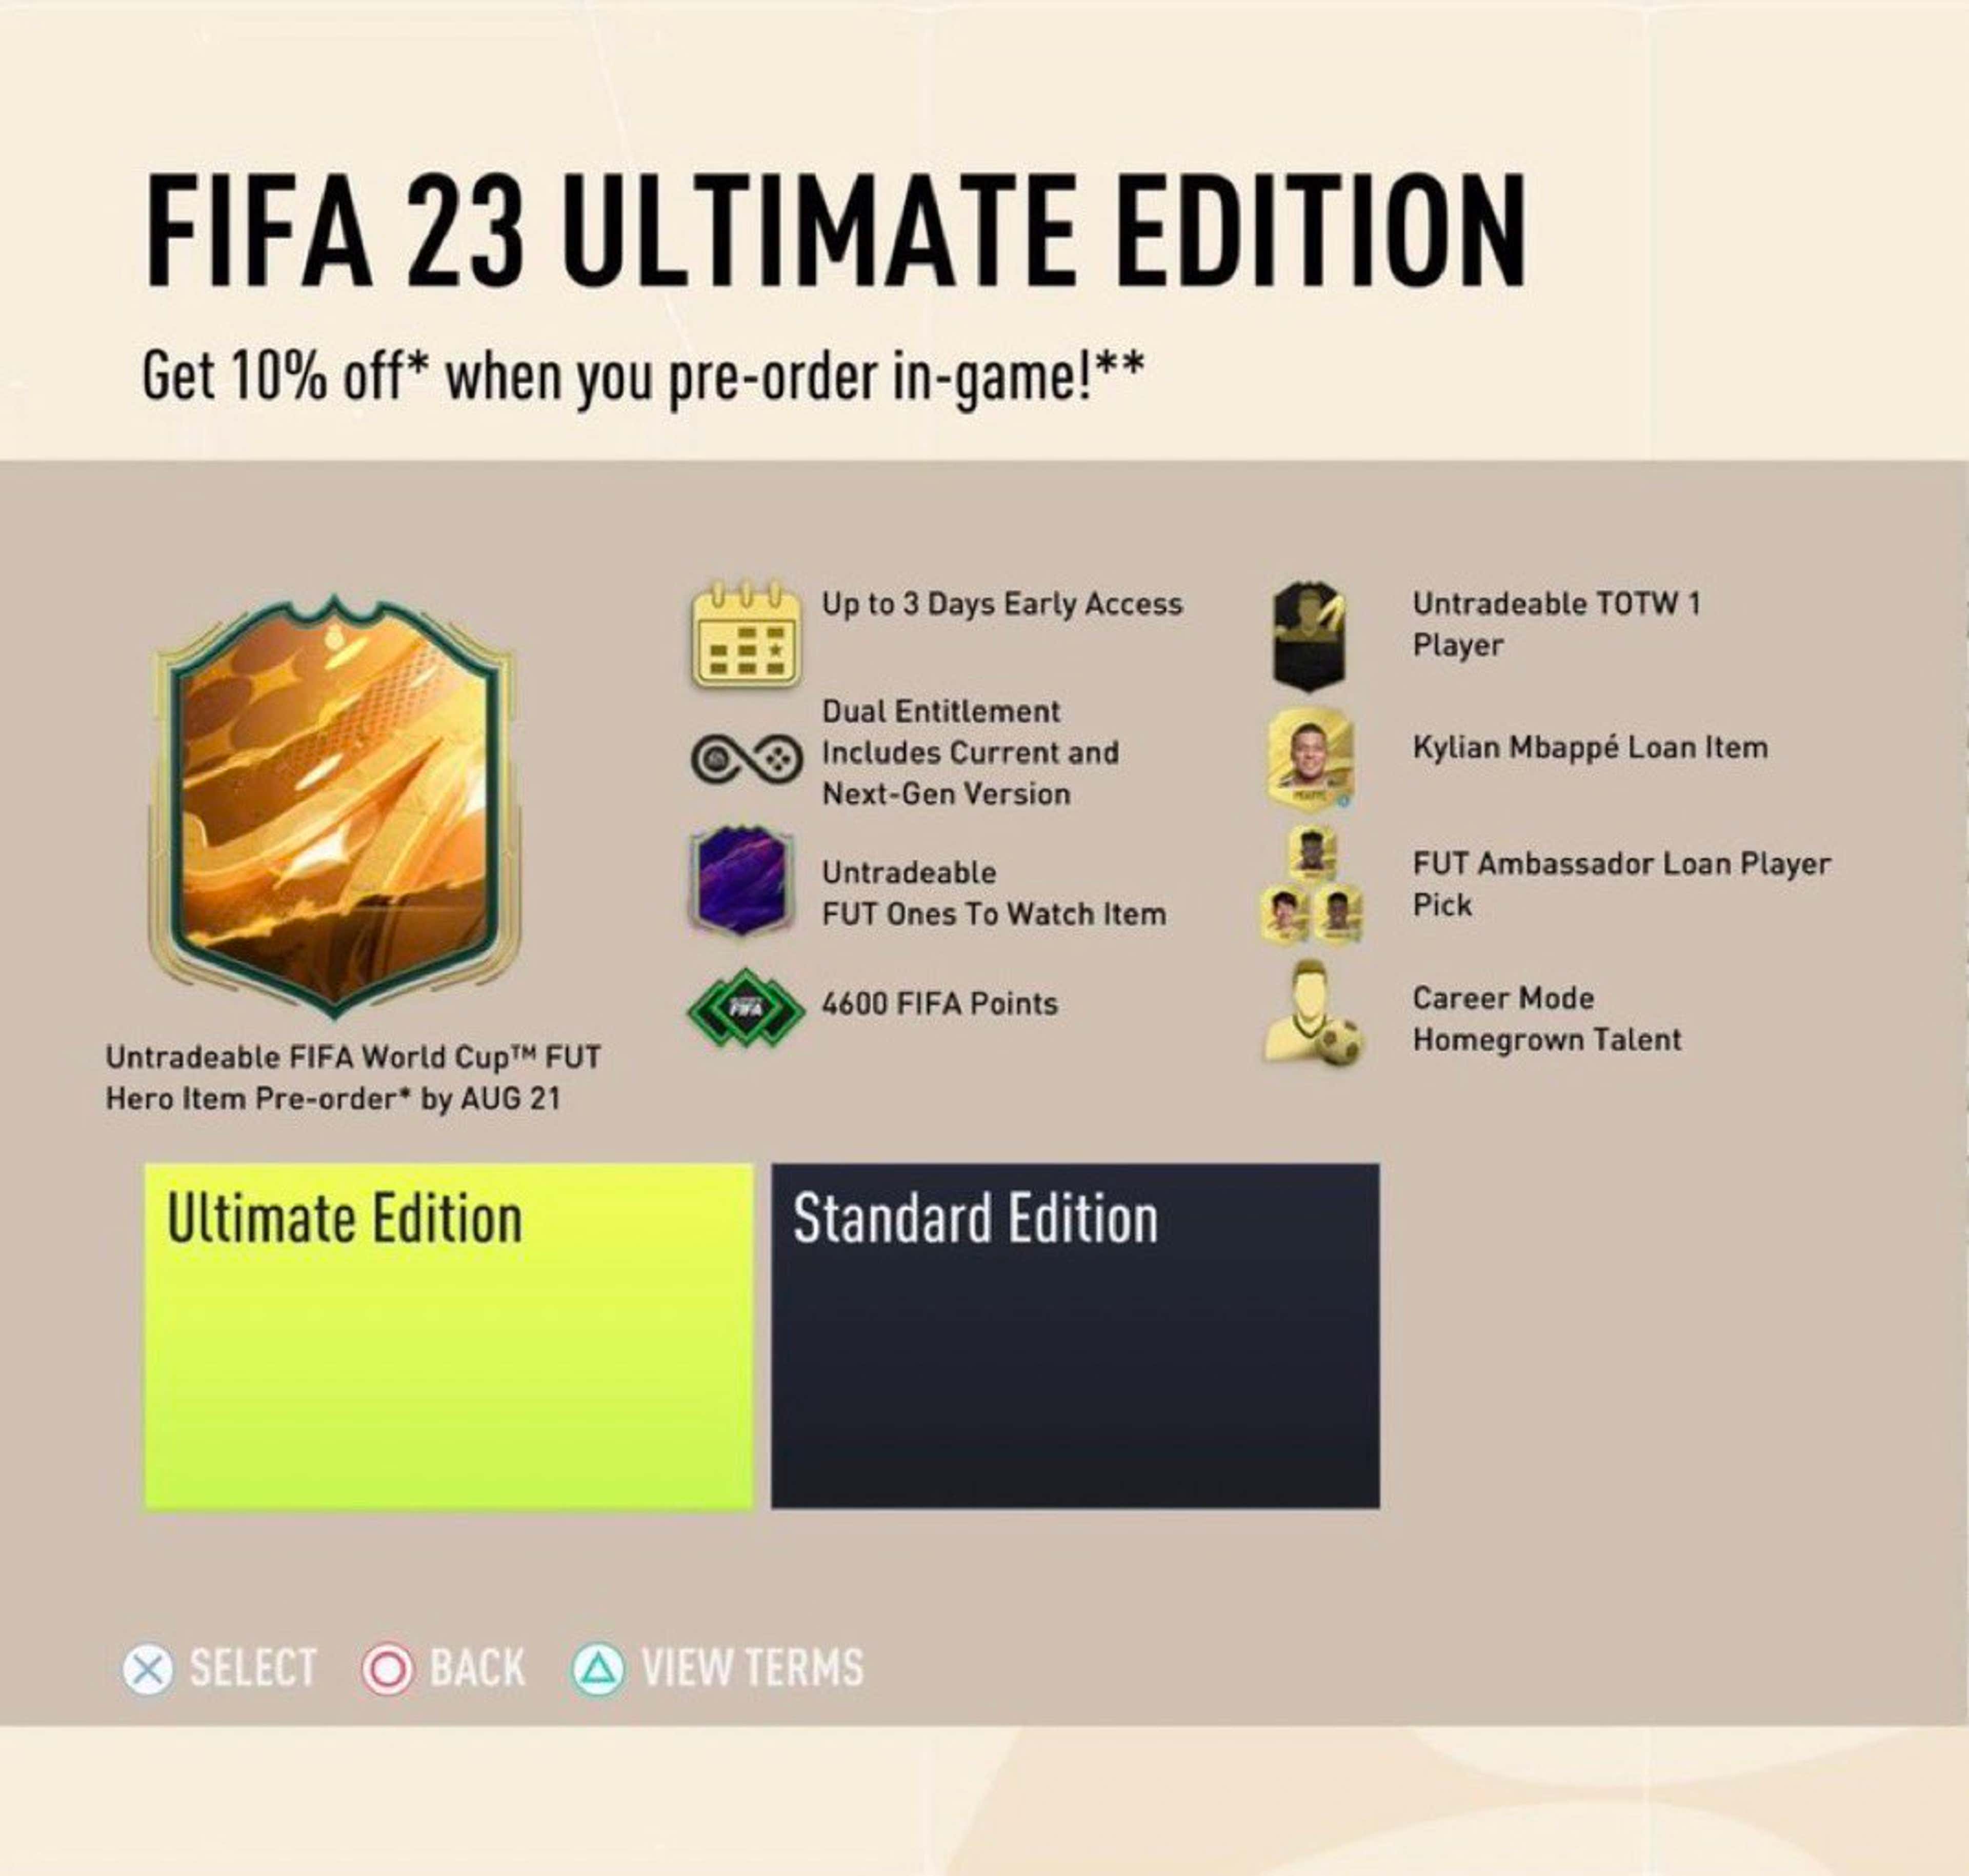 FIFA 23 Crossplay confirmado, entenda como funciona entre as plataformas